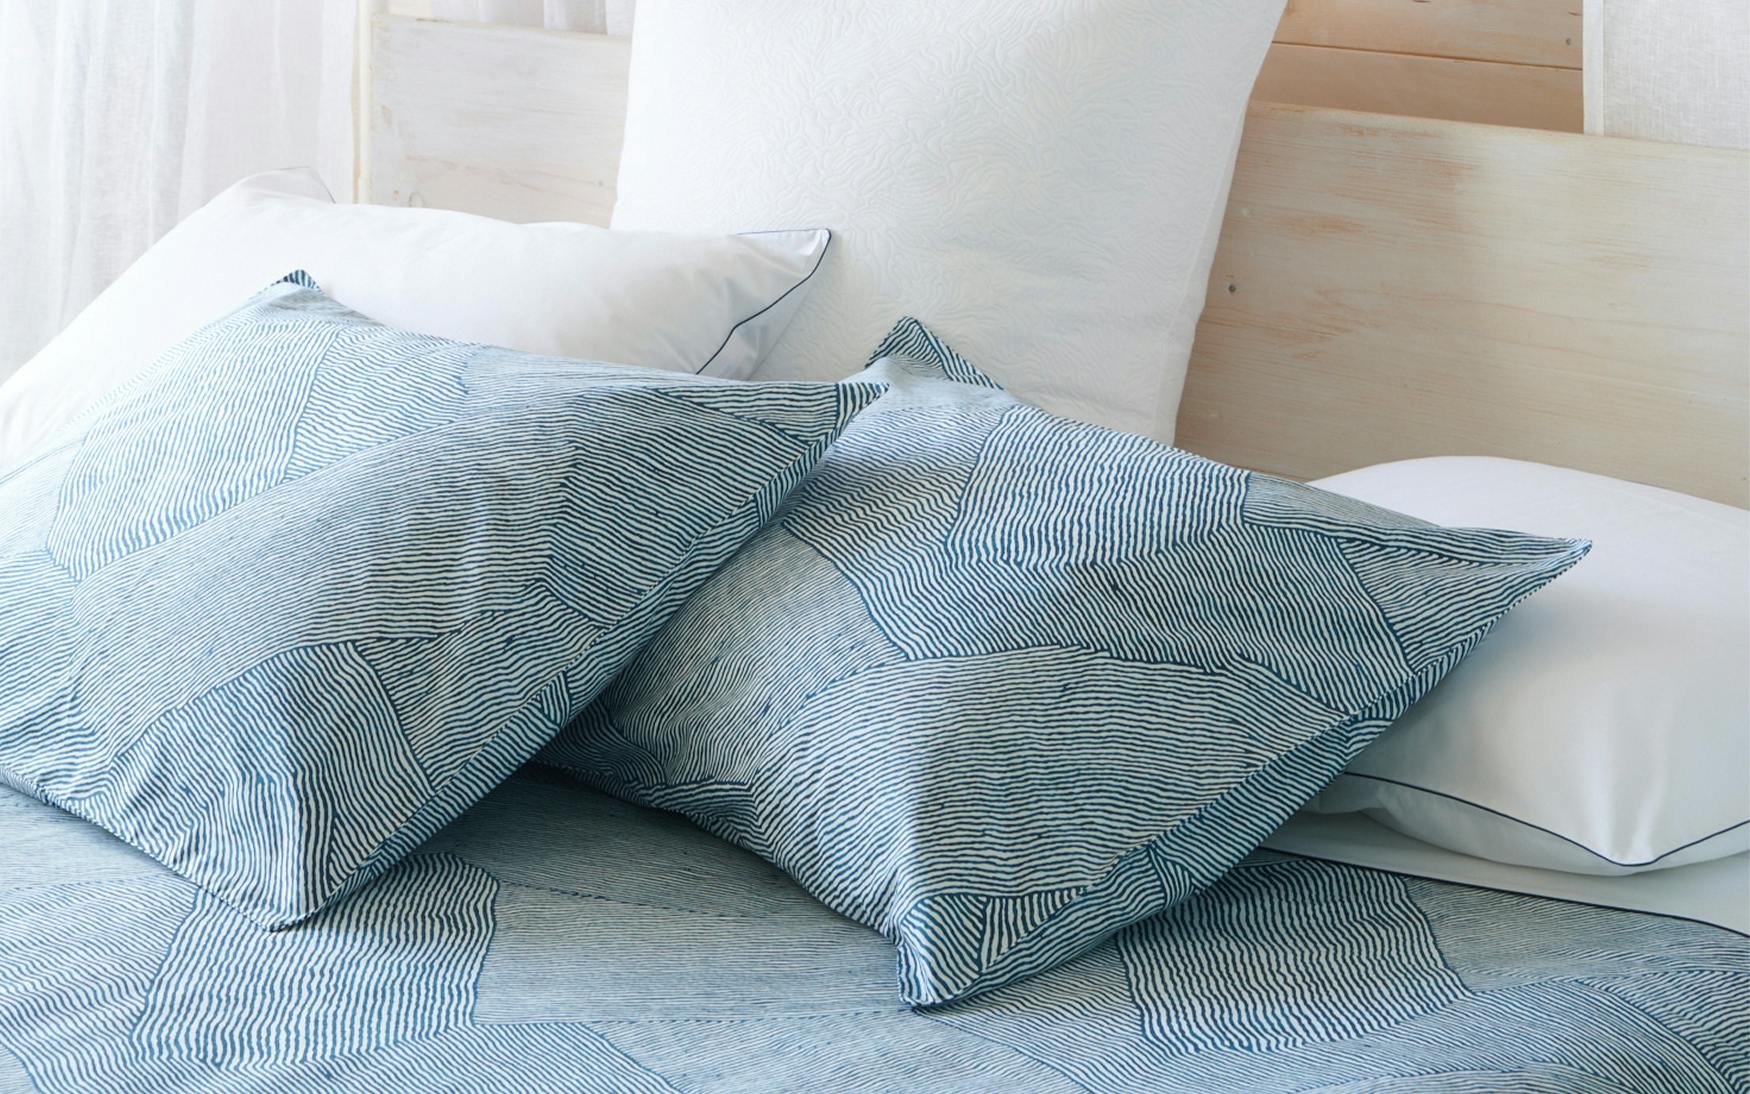 Details about   Lively Colorful Pillow Sham Decorative Pillowcase 3 Sizes Bedroom Decoration 